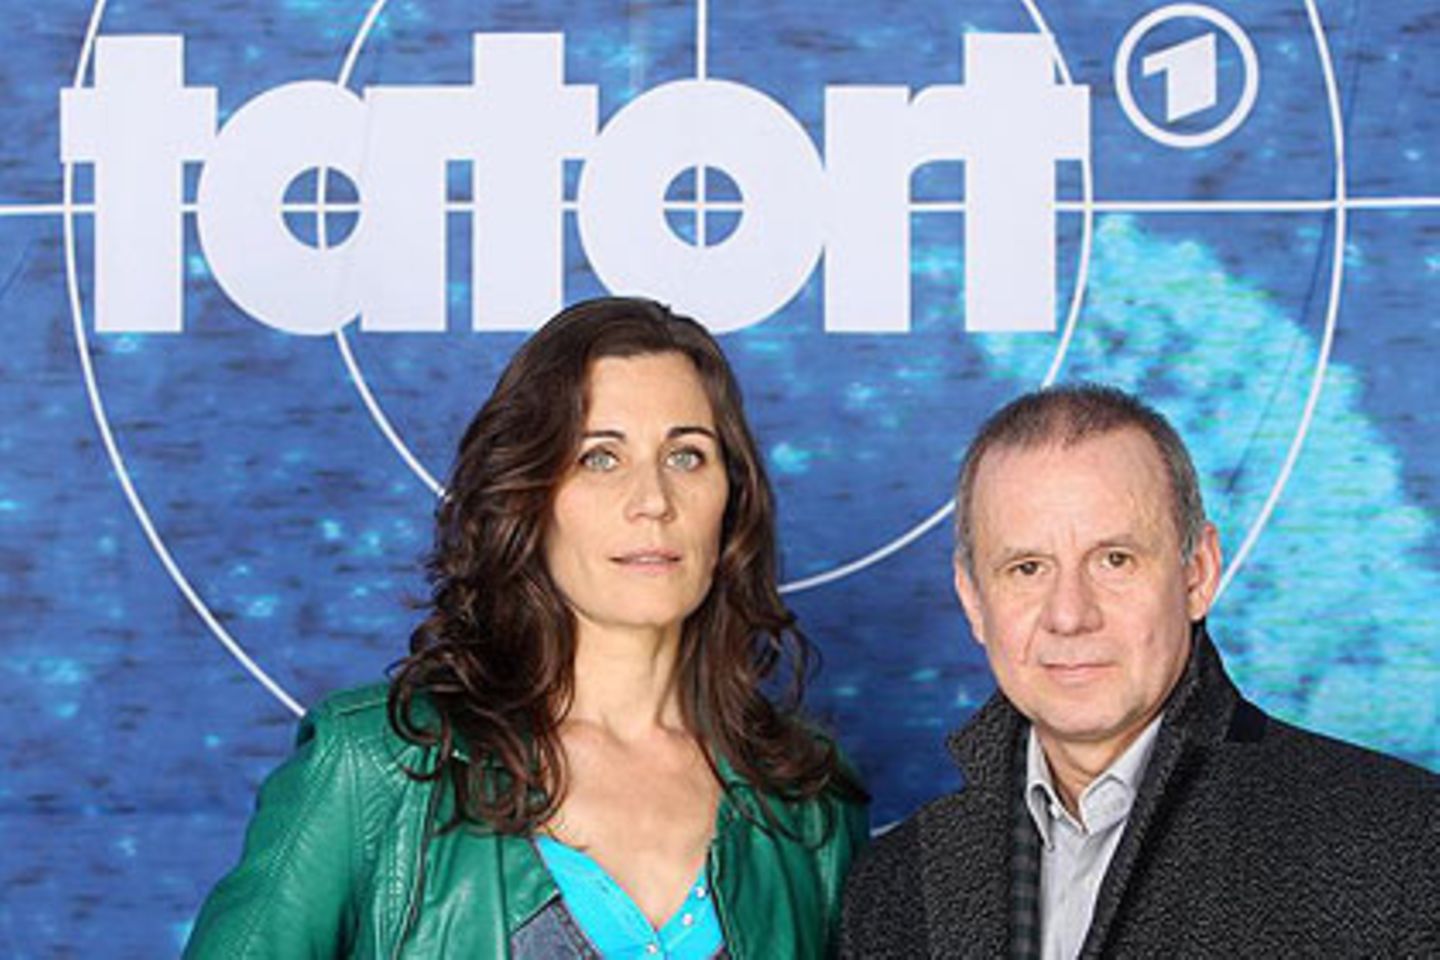 Joachim Król und Nina Kunzendorf im "Tatort"